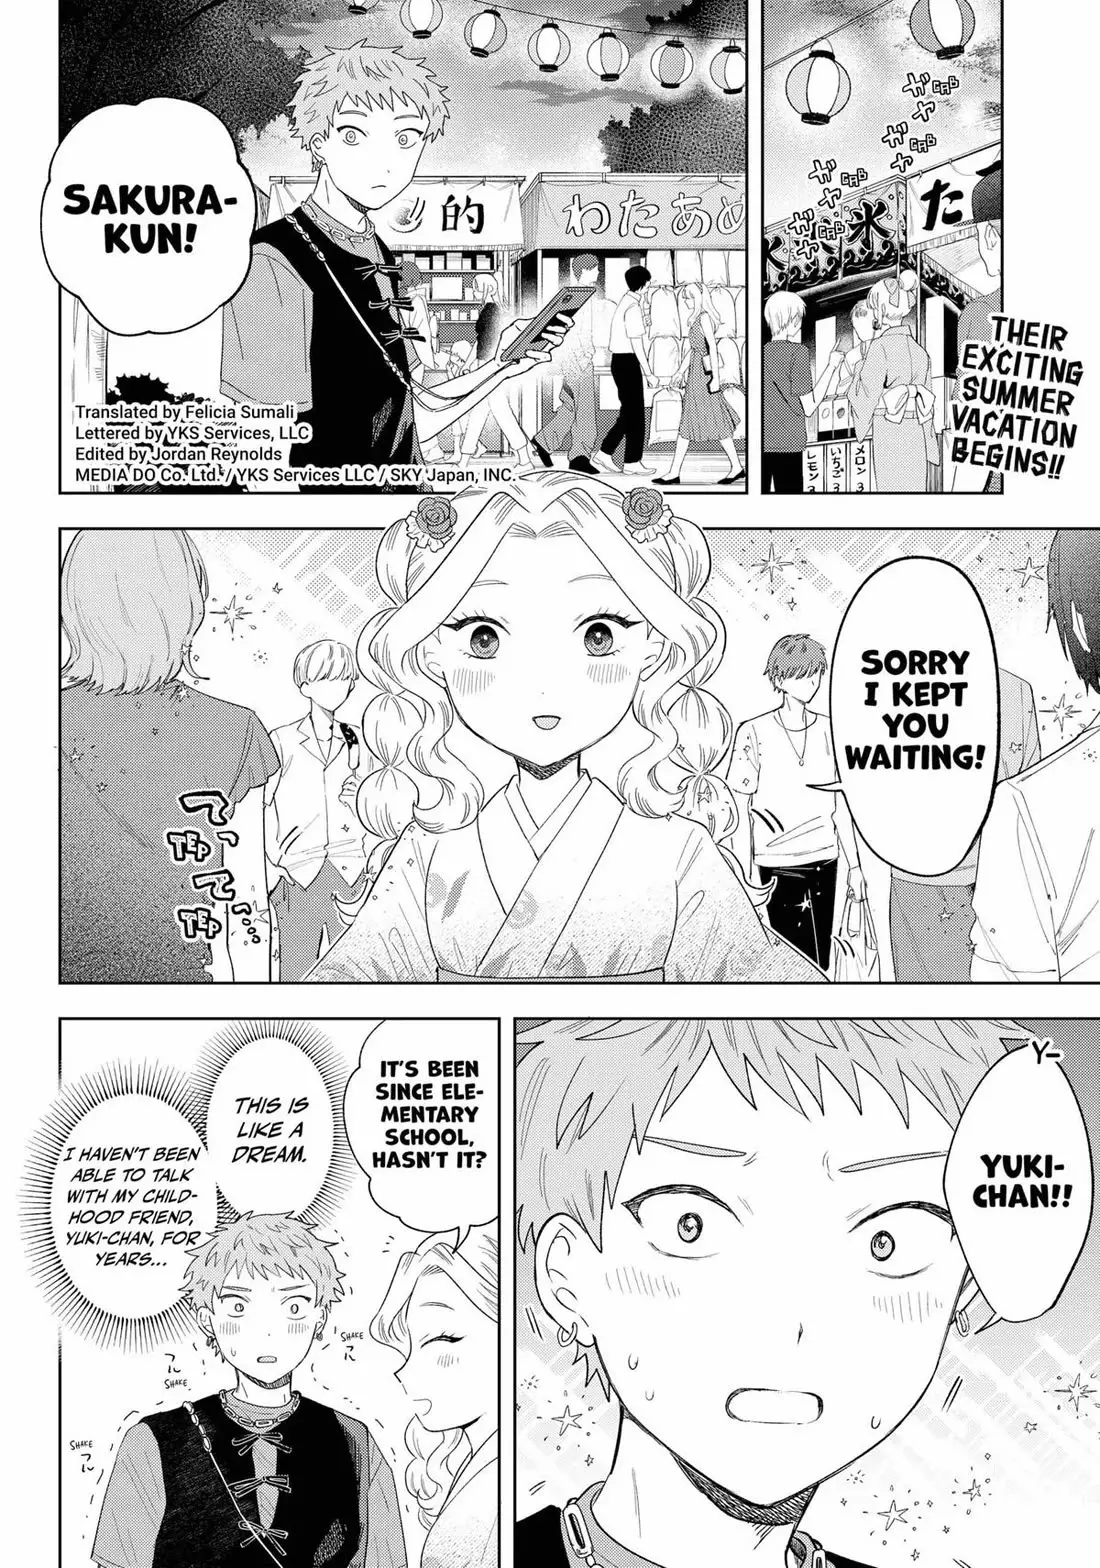 Tsuruko Returns The Favor - 19 page 2-7e6fe335